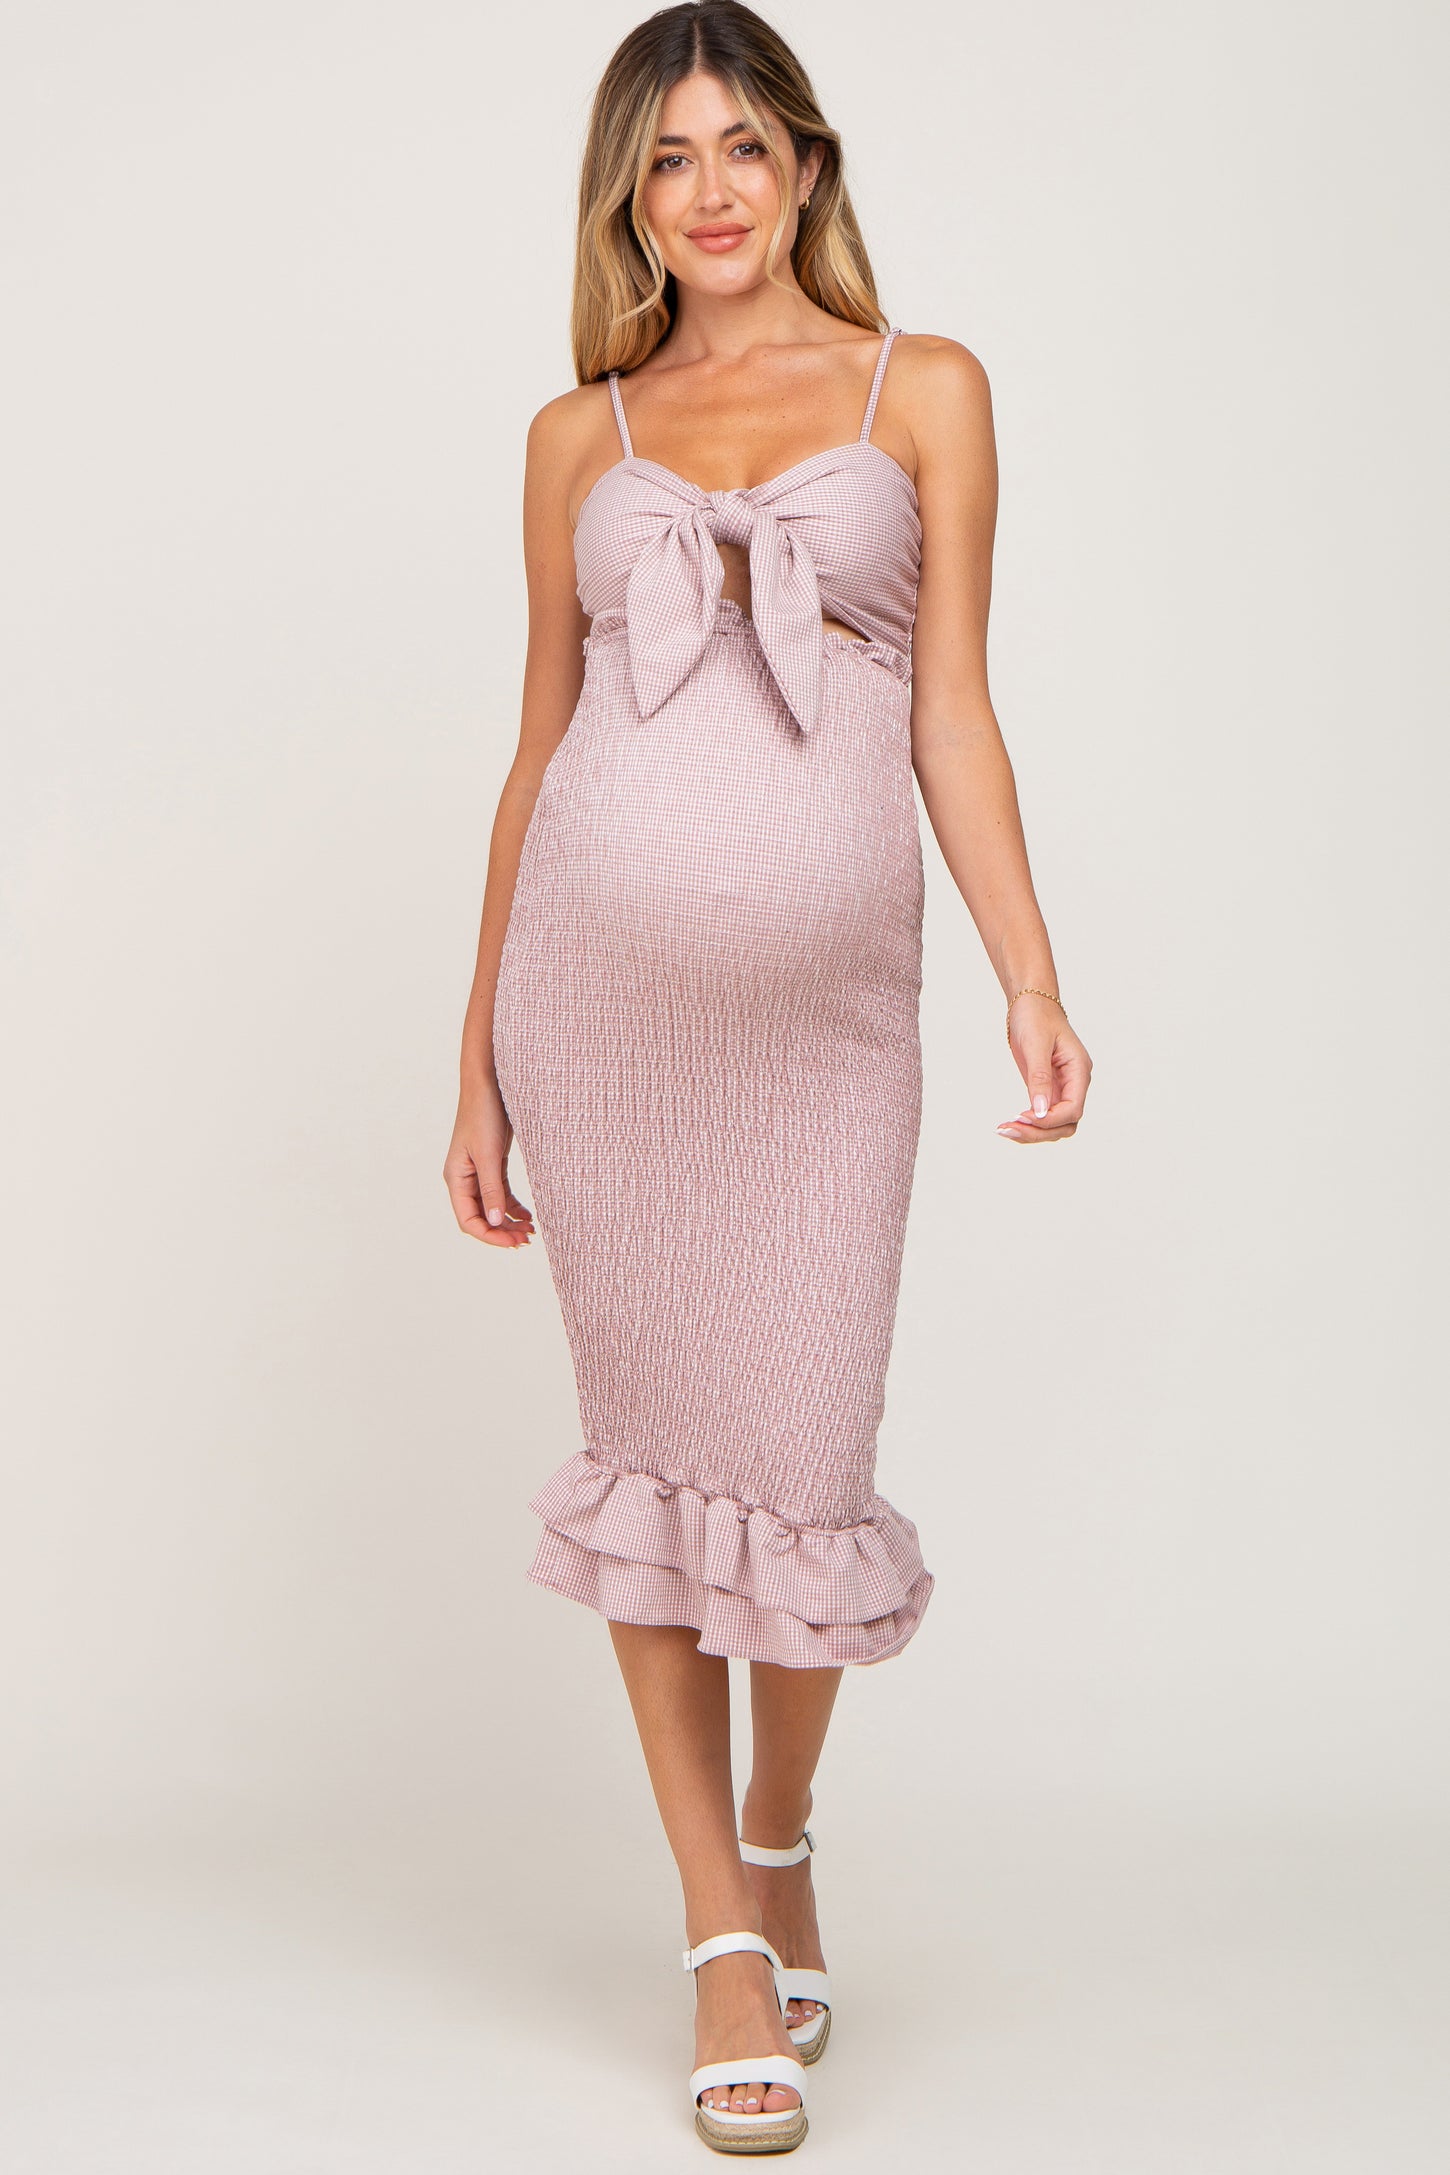 Mauve Gingham Print Smocked Fitted Self-Tie Maternity Midi Dress